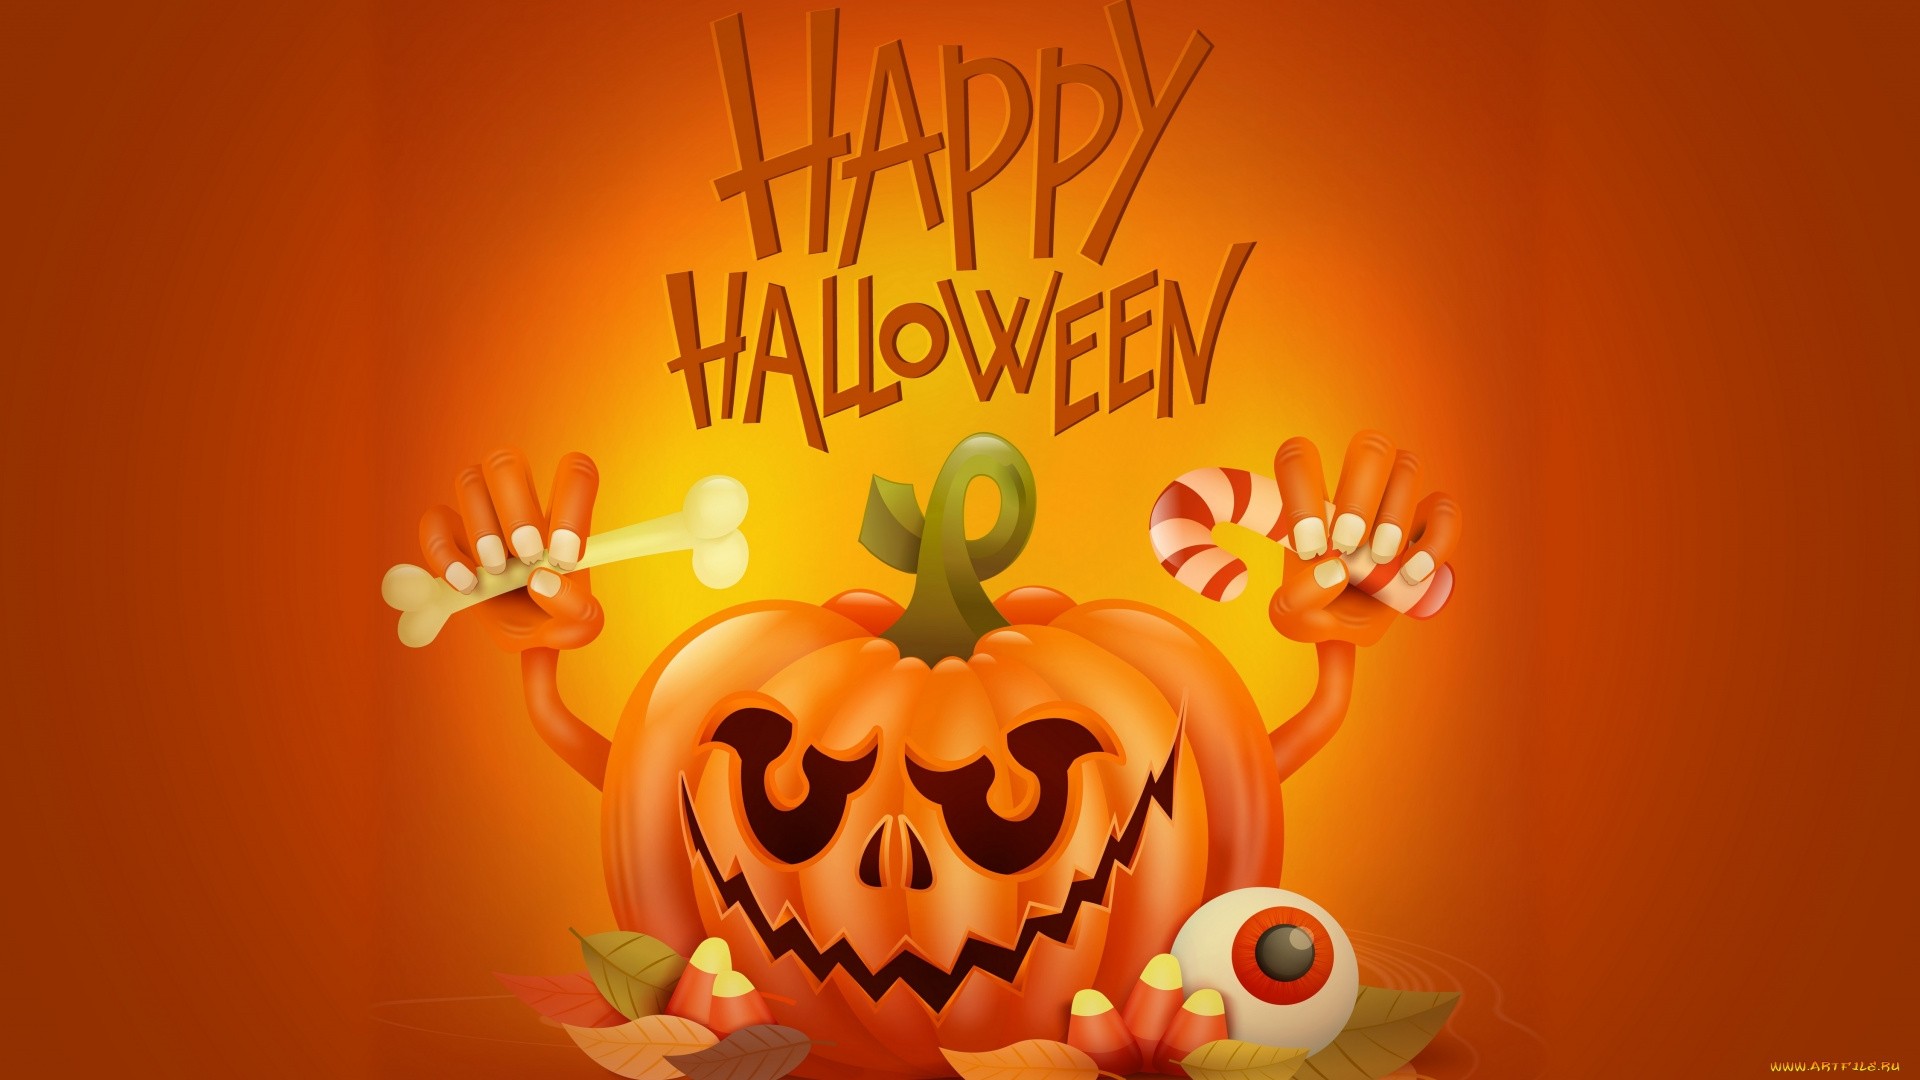 Halloween Greeting Card Background